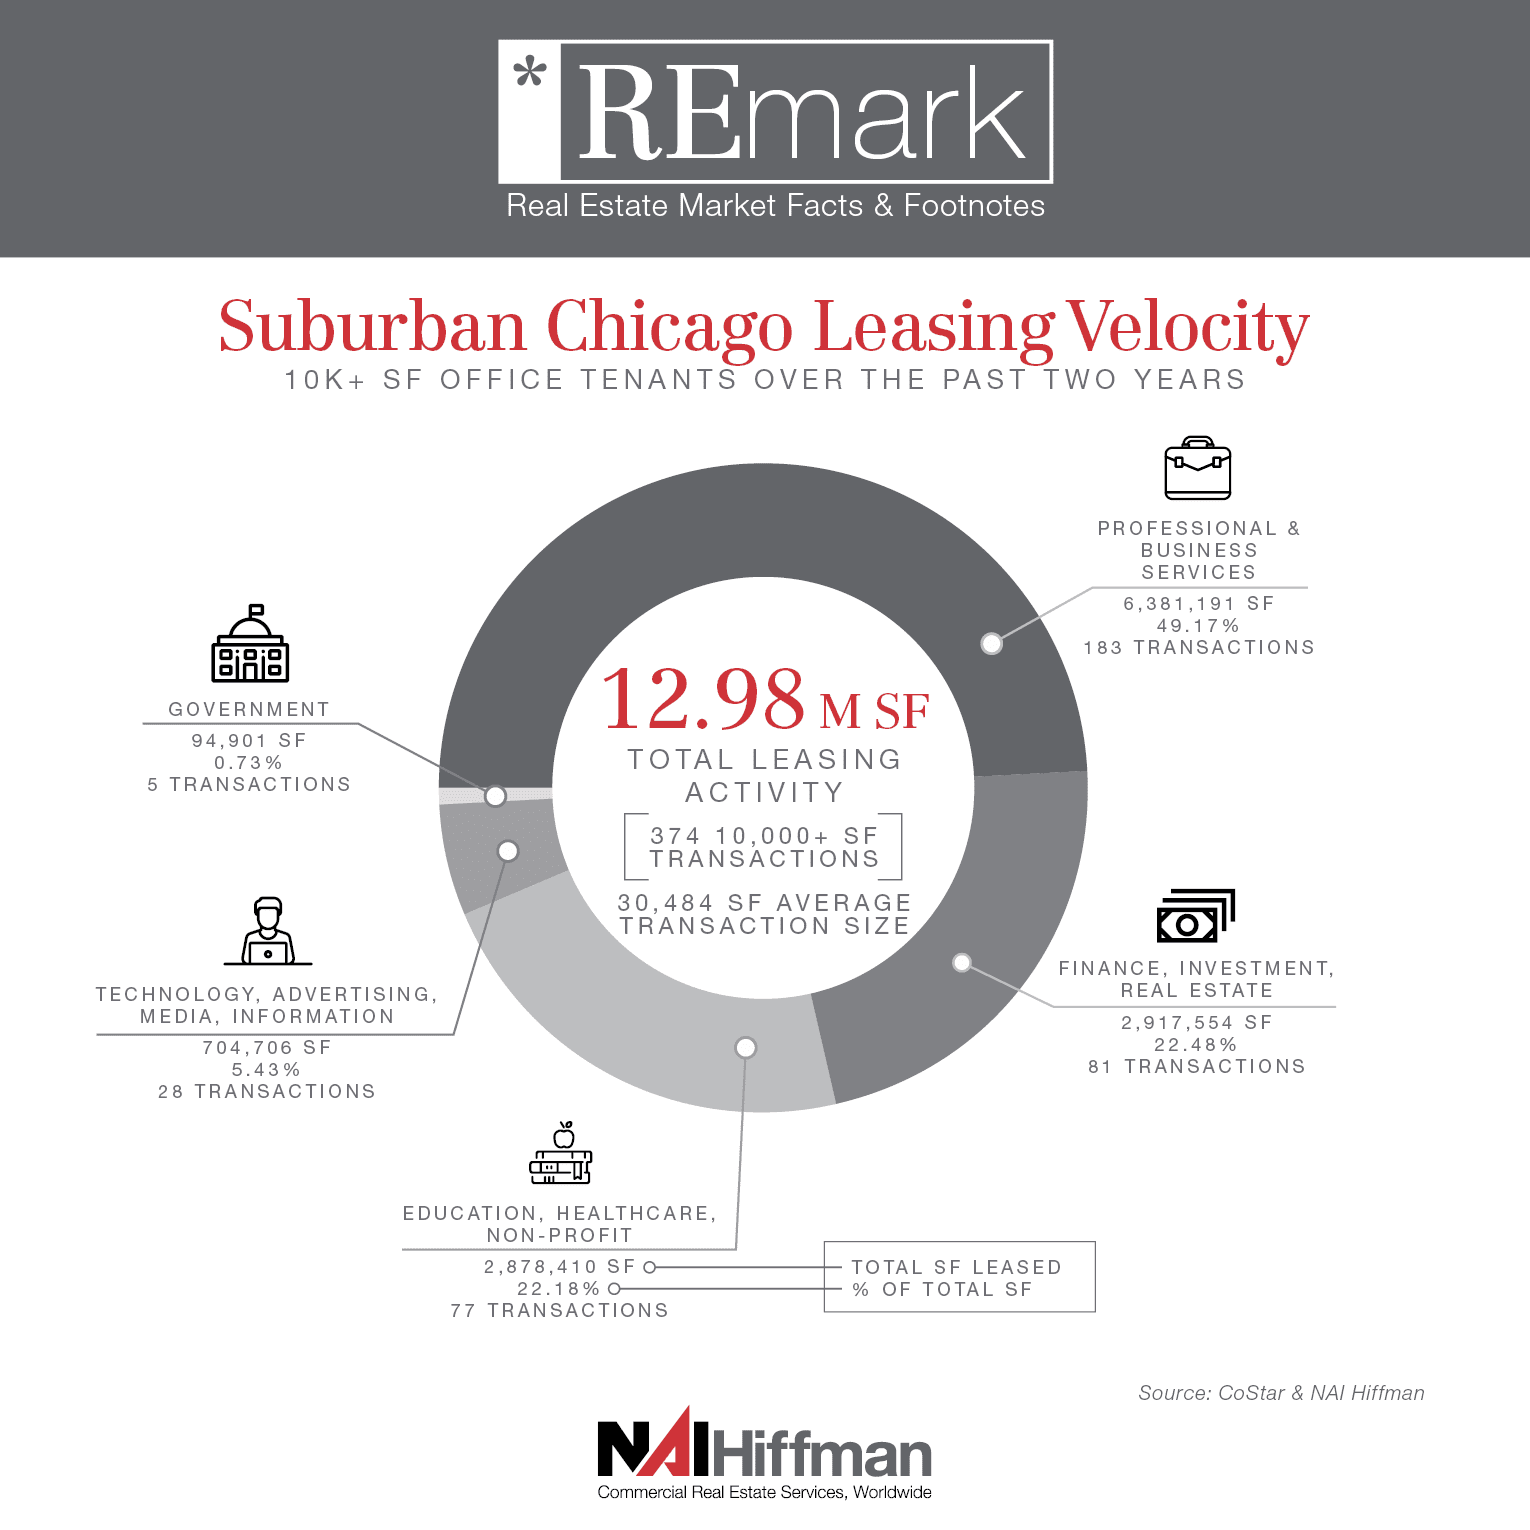 Suburban Chicago Leasing Velocity